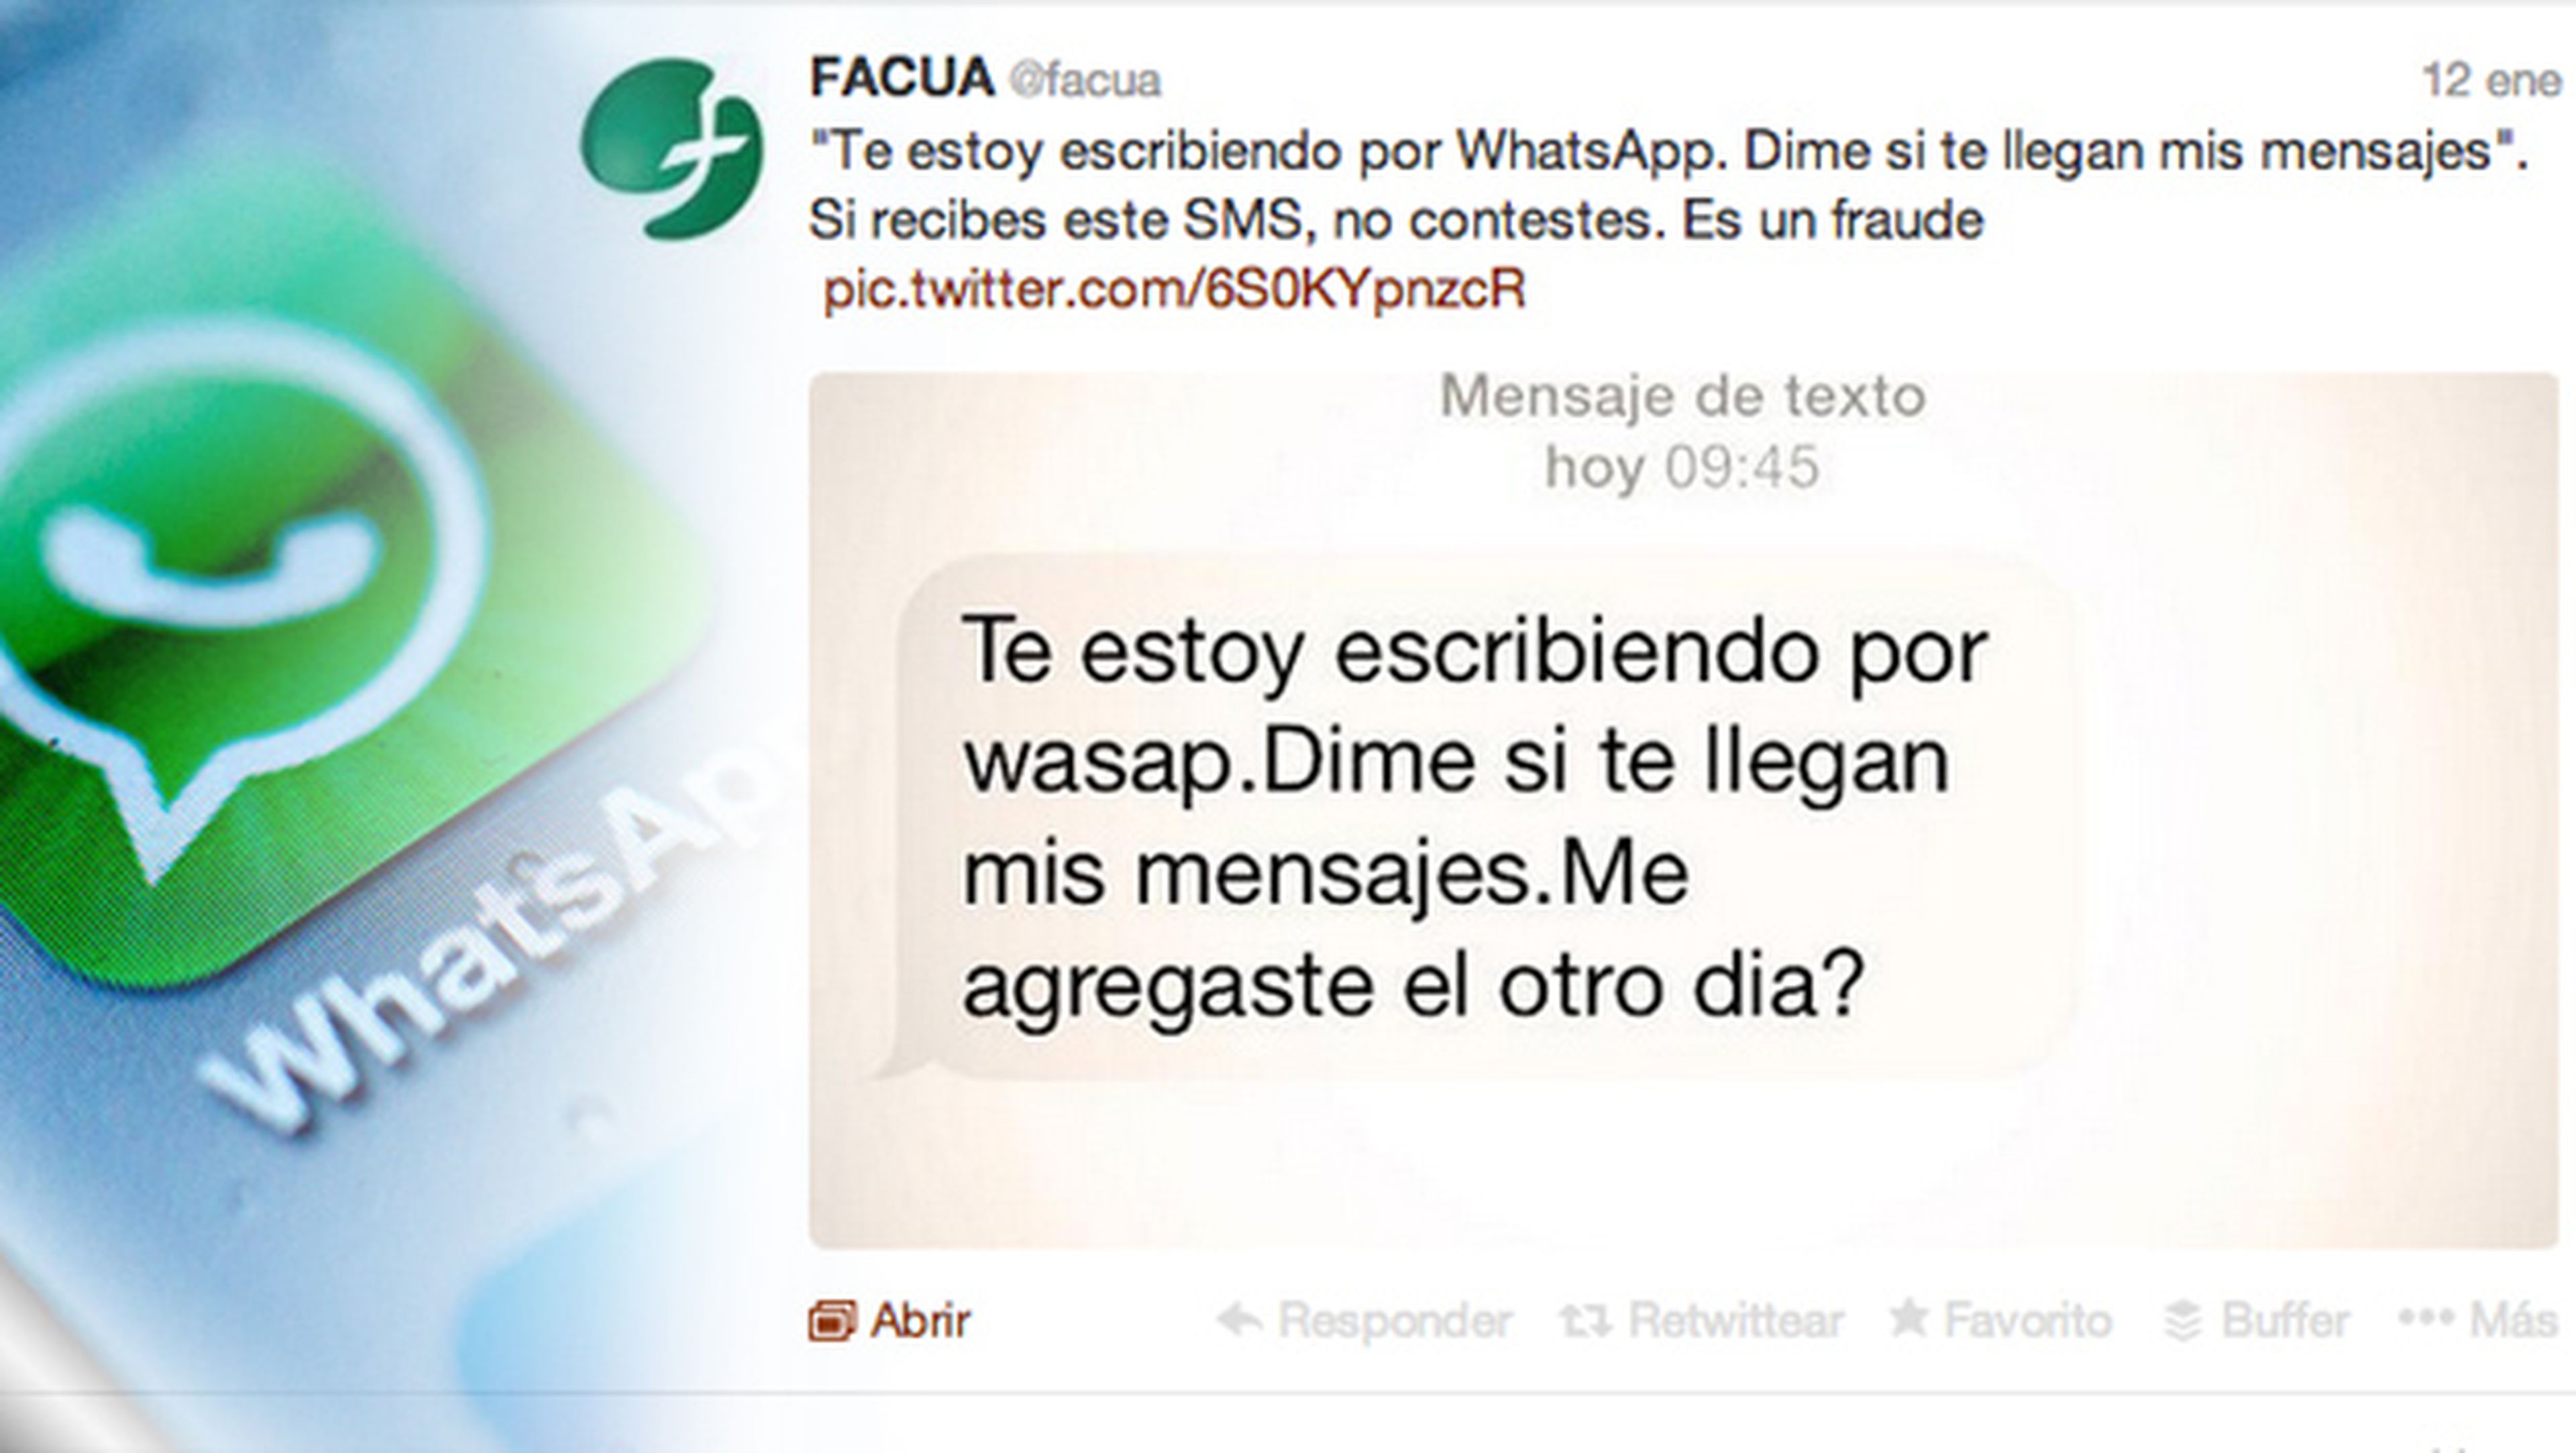 ¡Alerta! Una estafa circula a través de WhatsApp según Facua